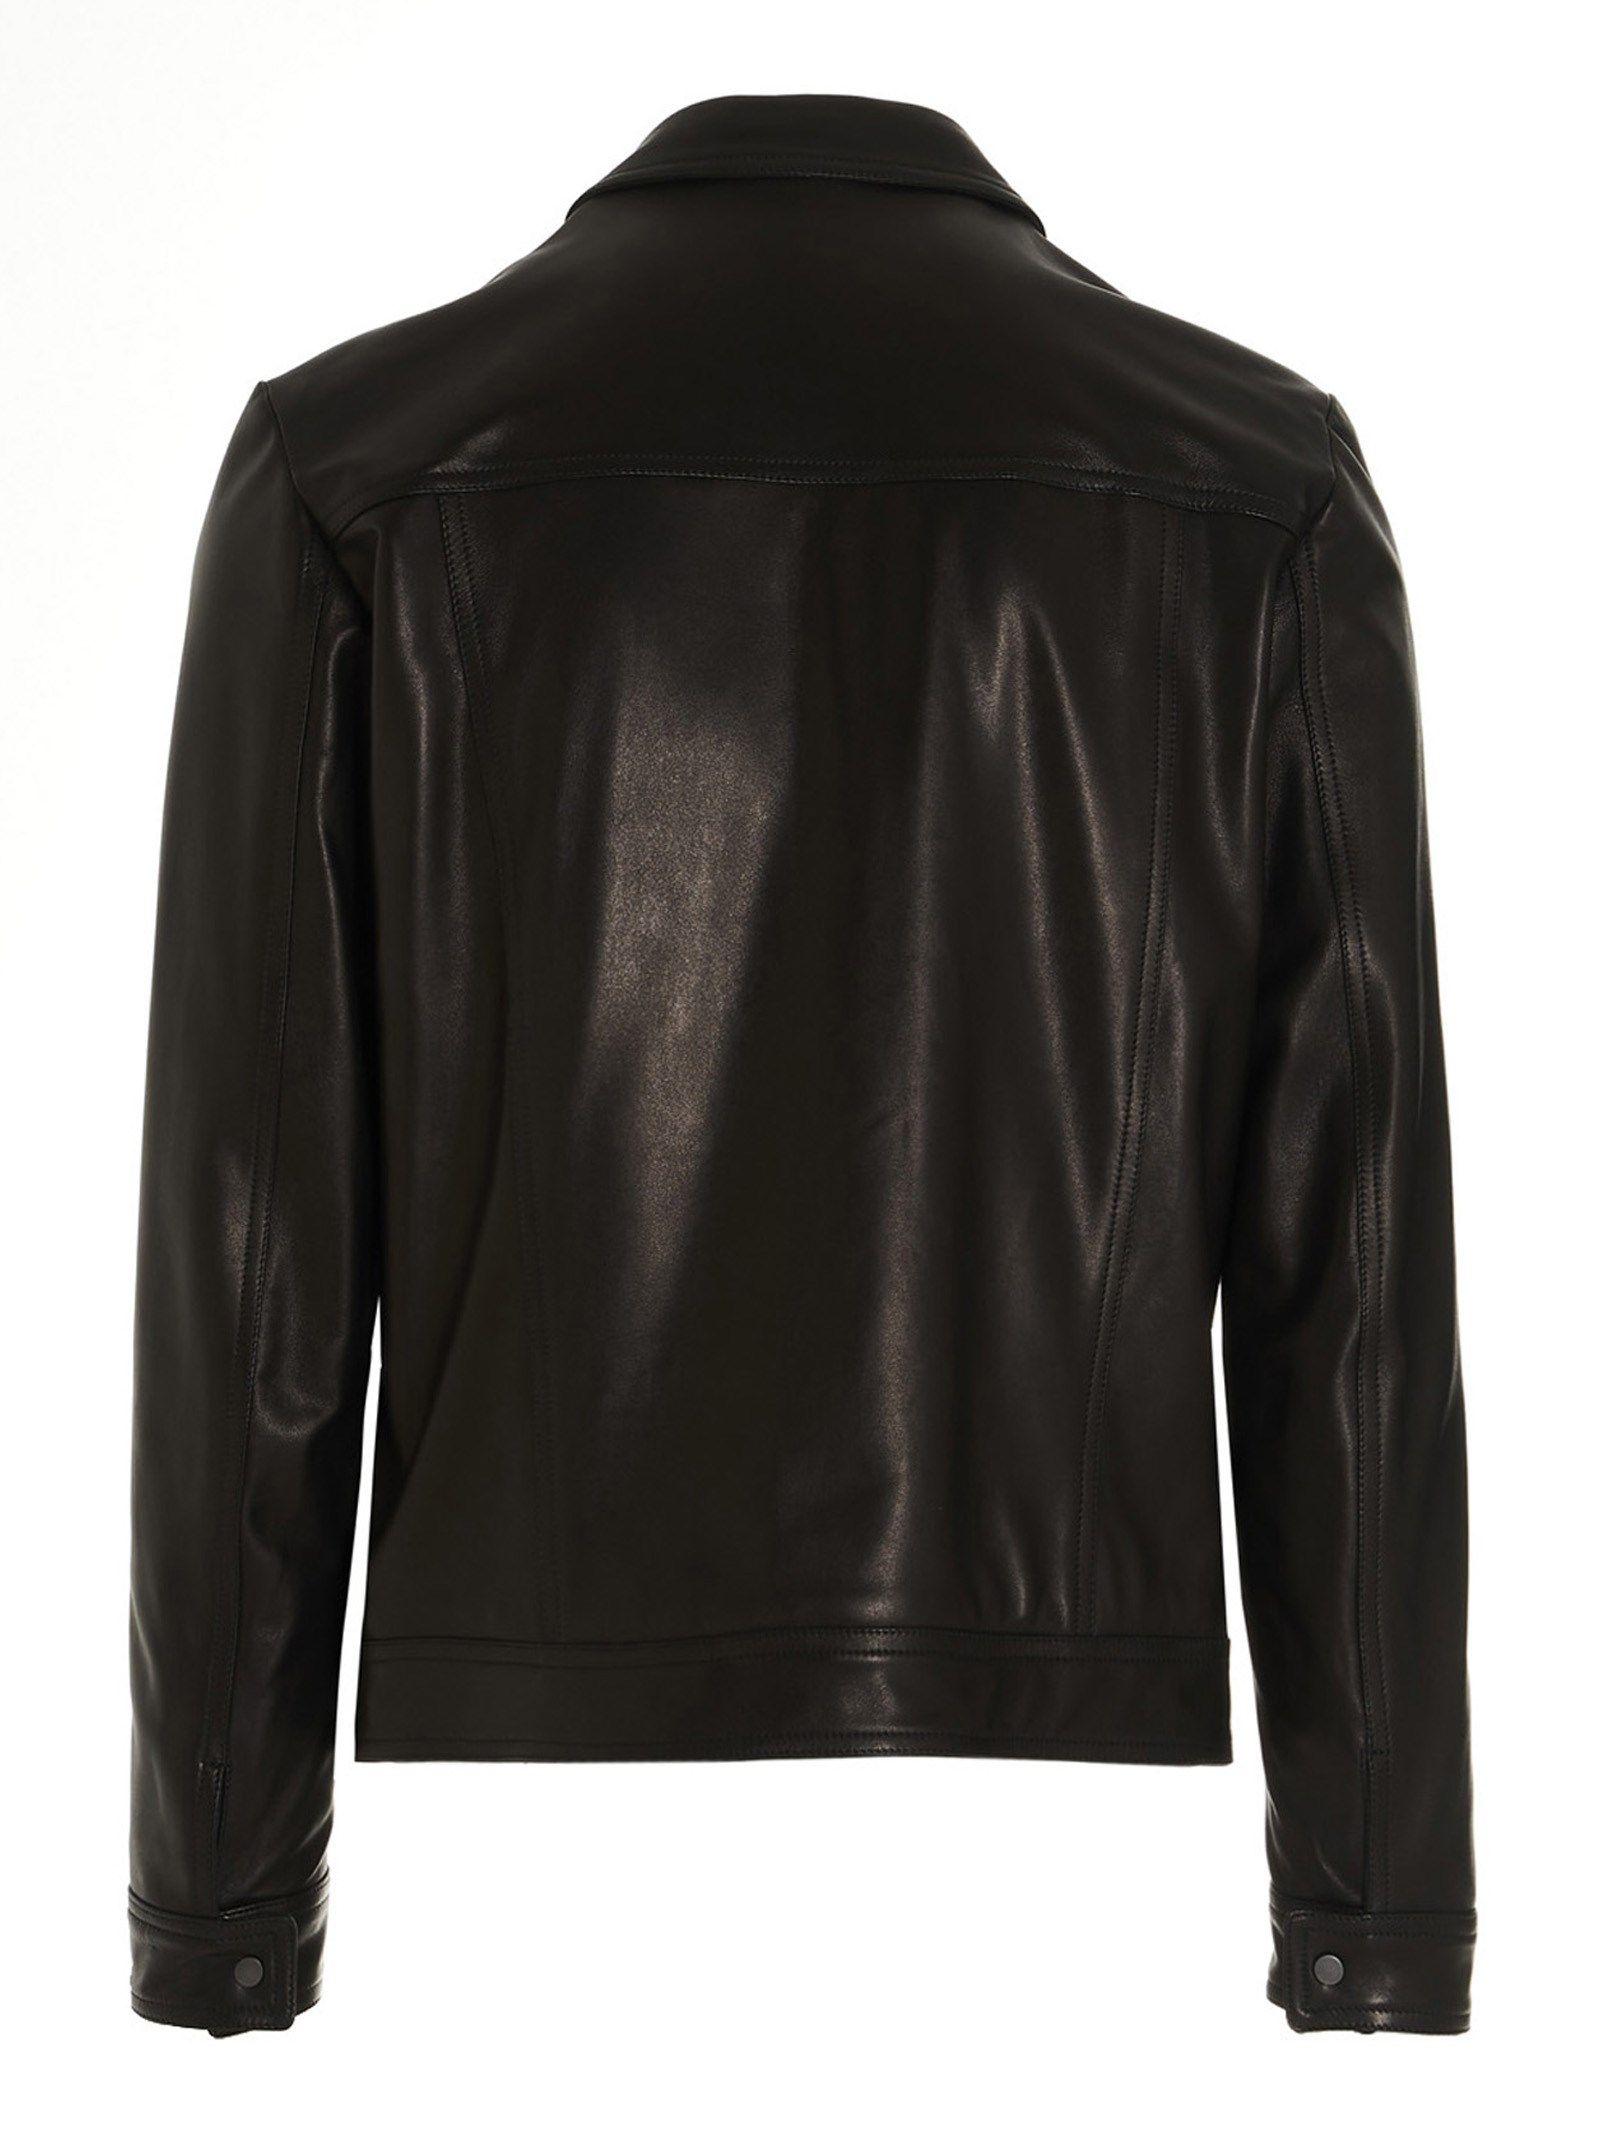 Salvatore Santoro 39543napa Leather Jacket in Black for Men - Lyst